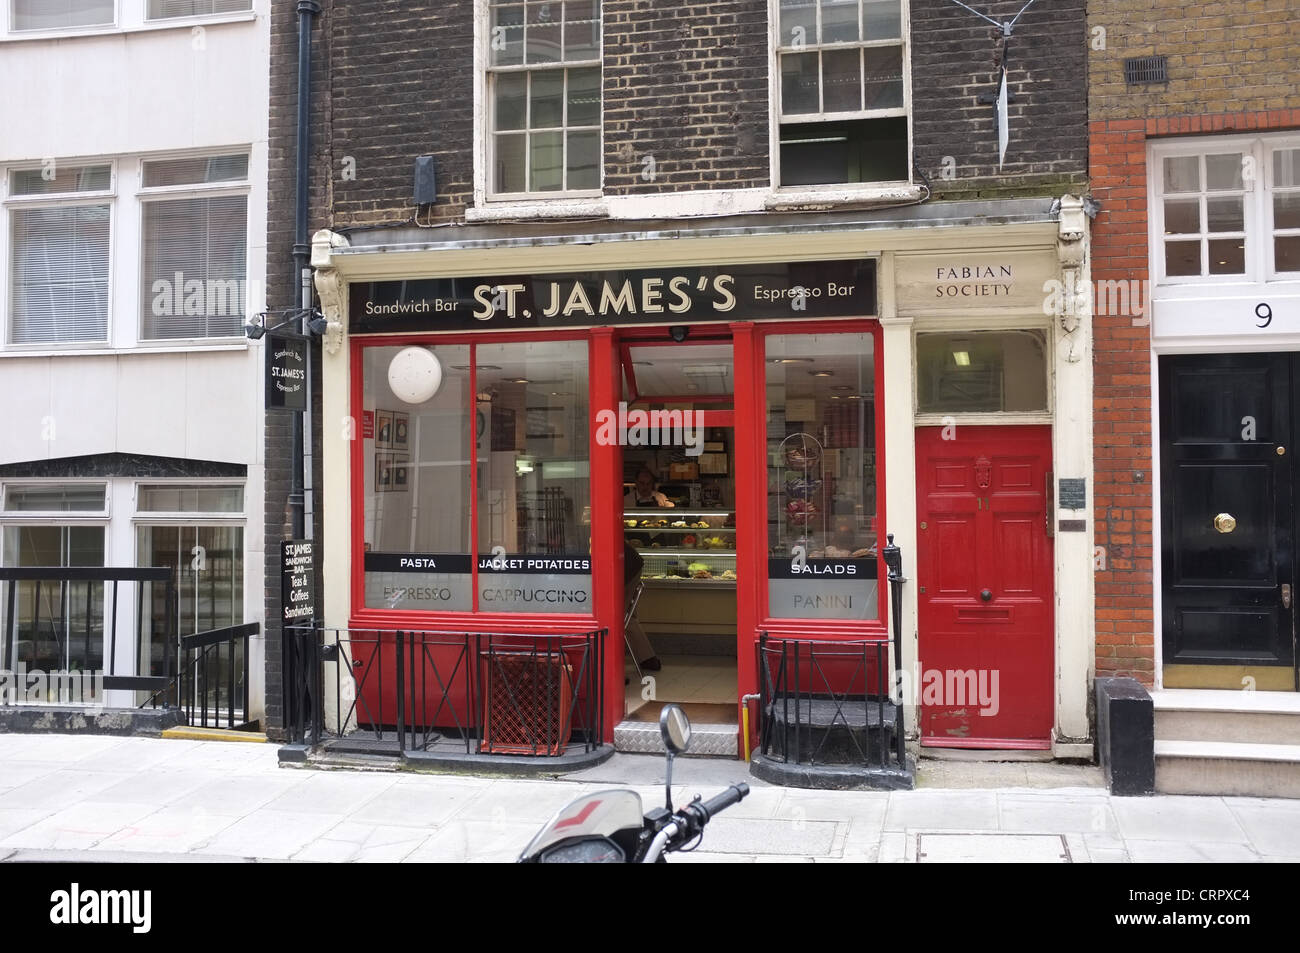 St. James's sandwich bar and the Fabian society office Dartmouth Street, London, SW1H 9BN Stock Photo